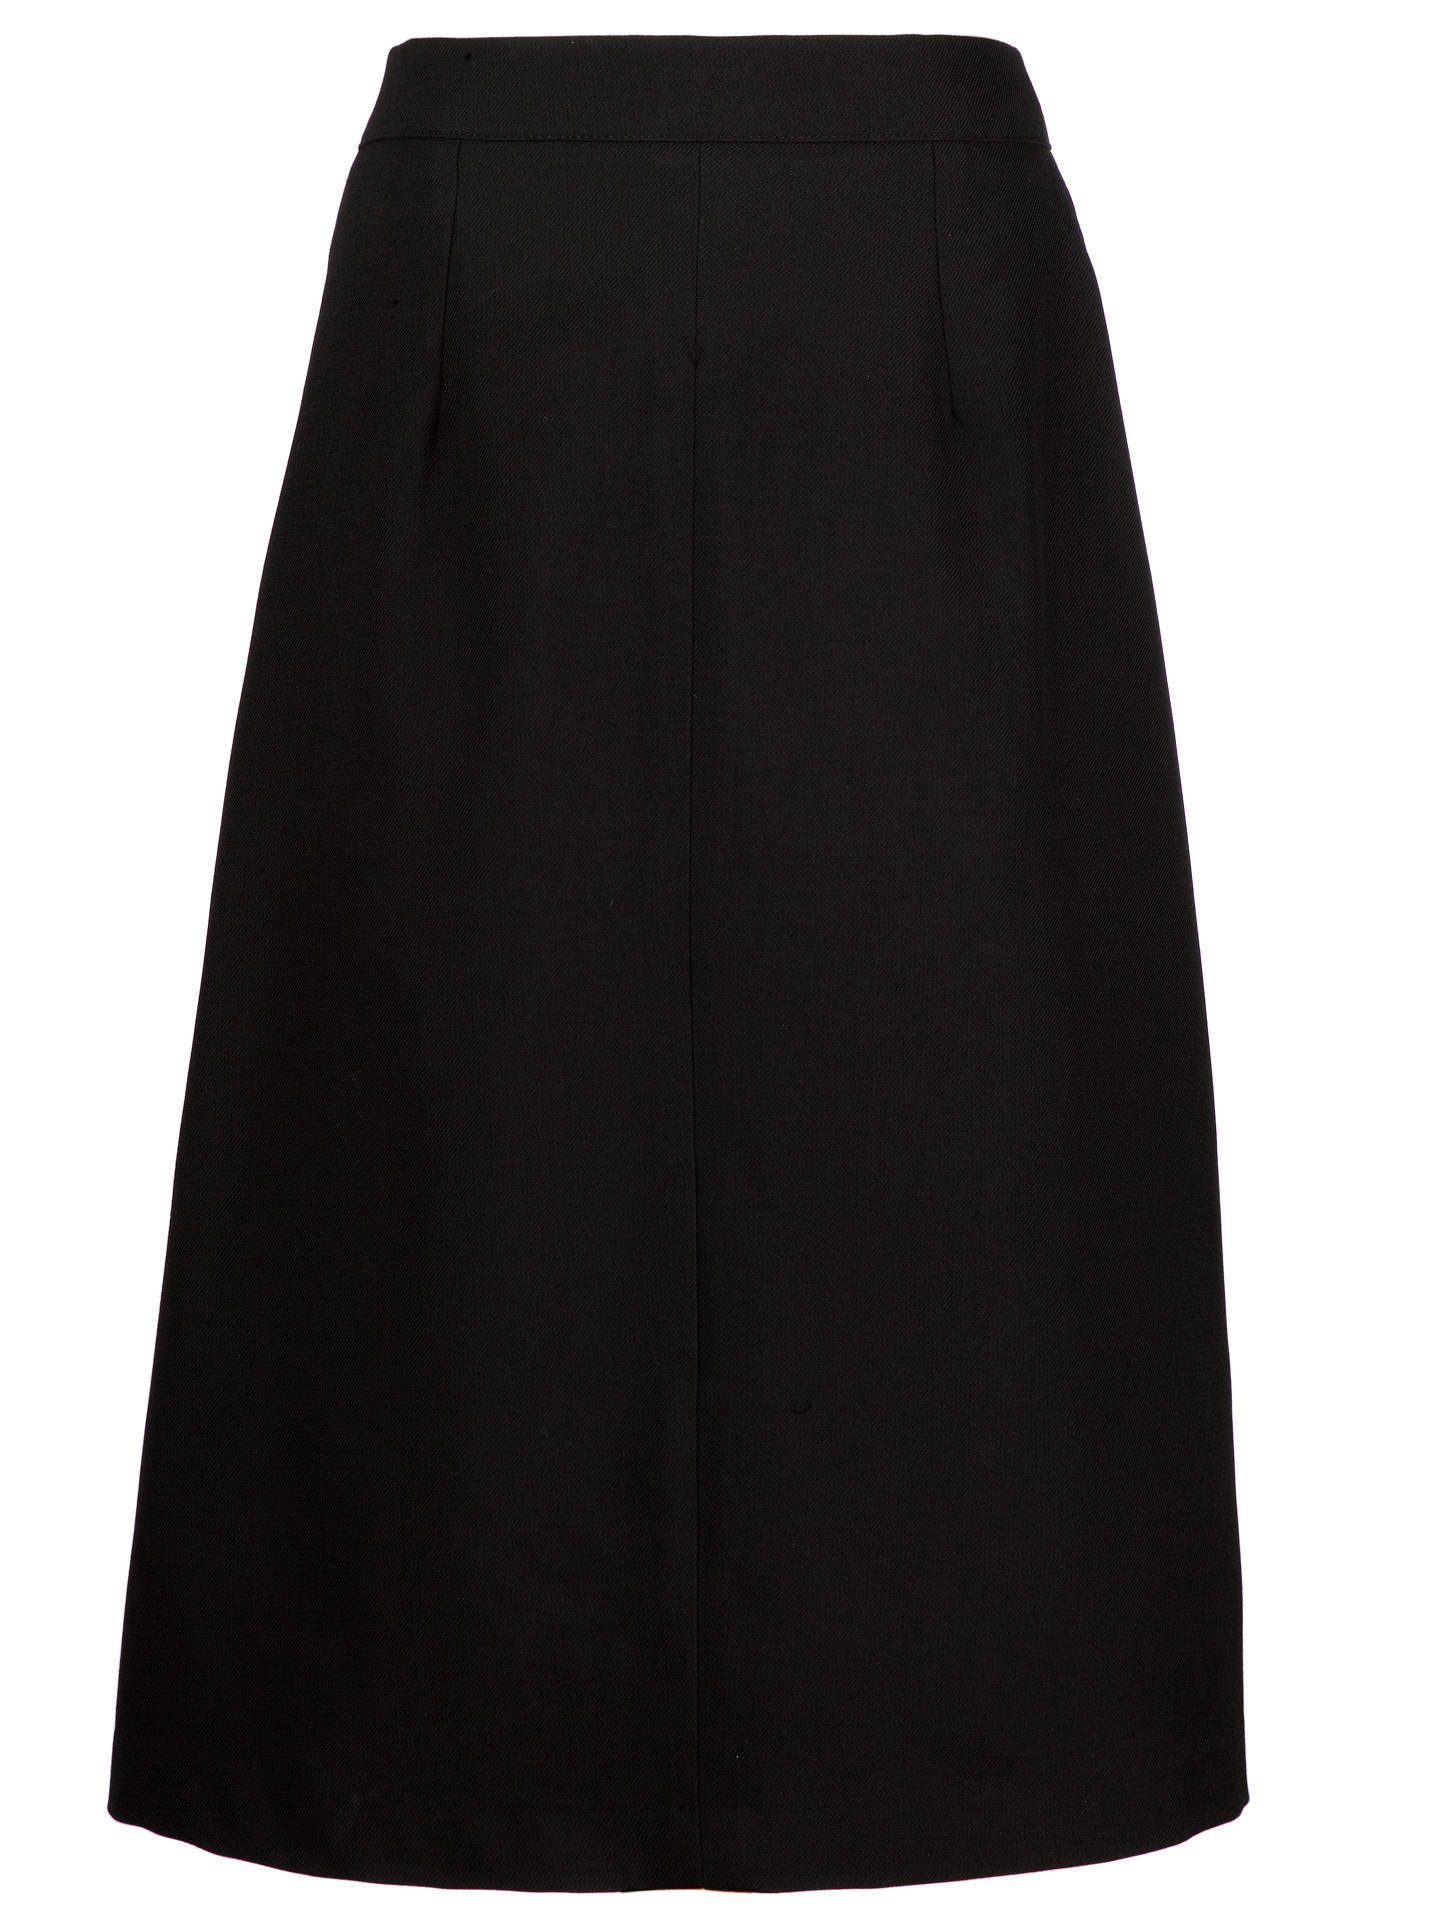 Girls' School A-Line Skirt, Black at John Lewis & Partners